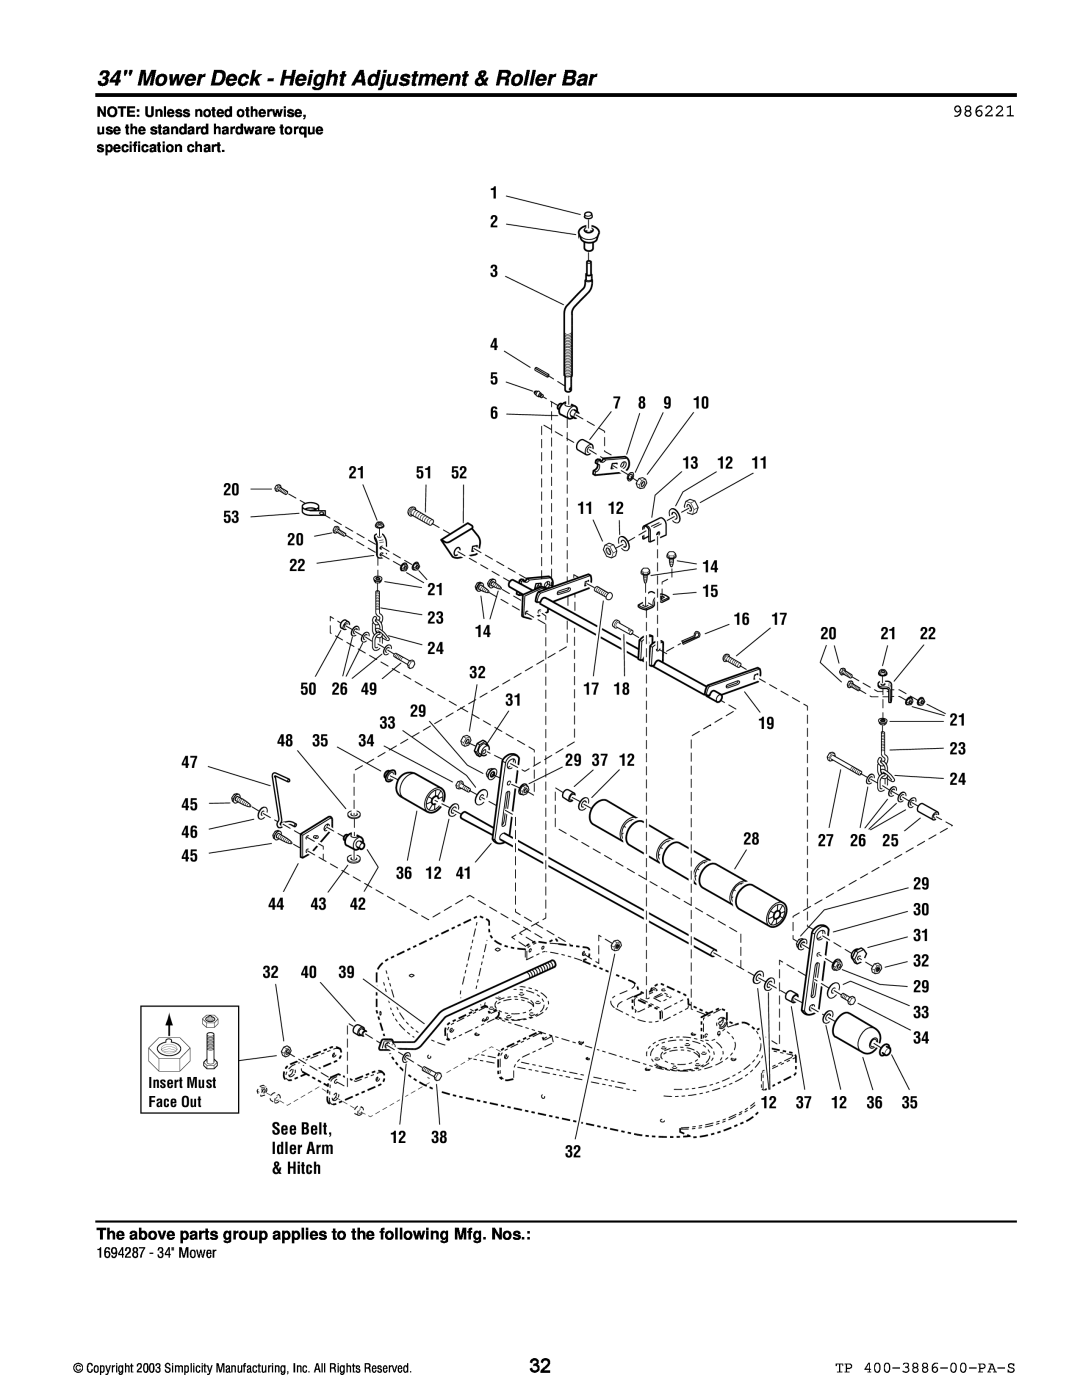 Simplicity Series Transaxle manual Mower Deck - Height Adjustment & Roller Bar, 986221 